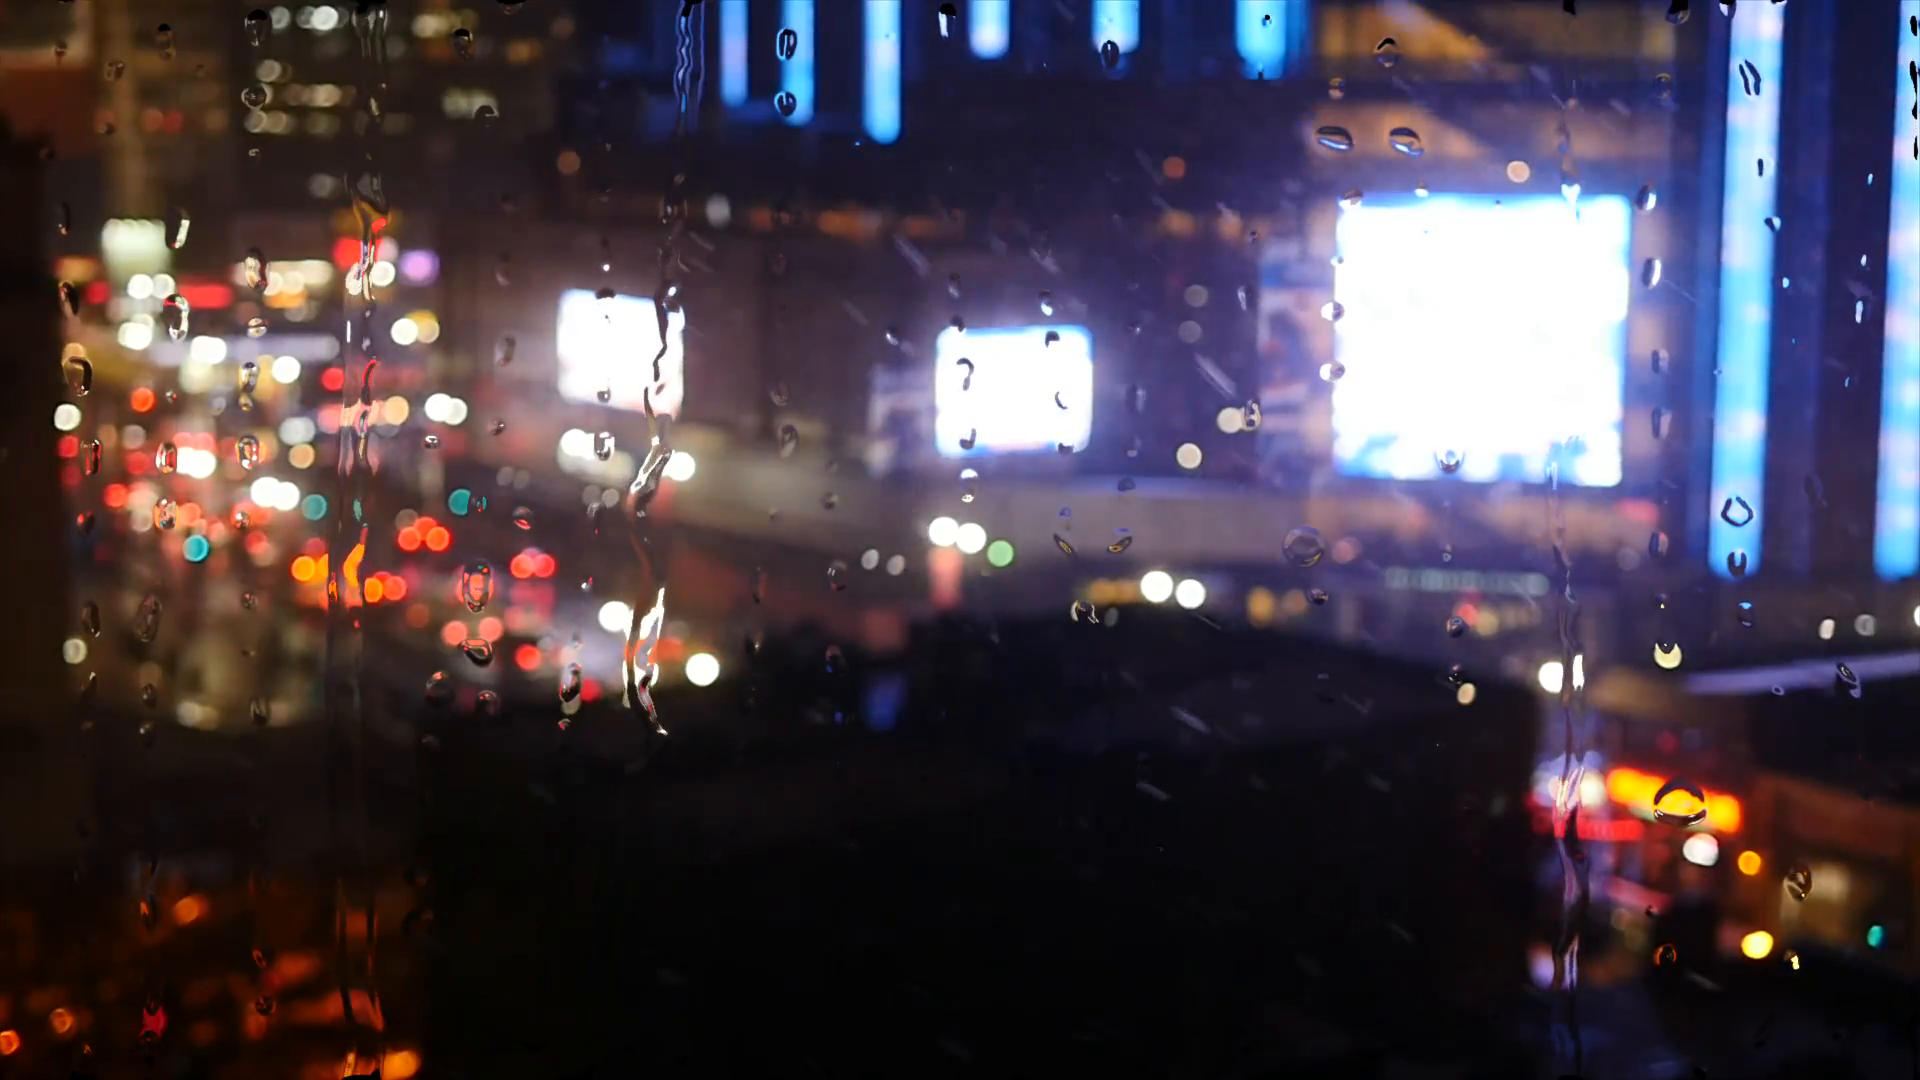 new york city traffic lights at night. rain drops on window ...